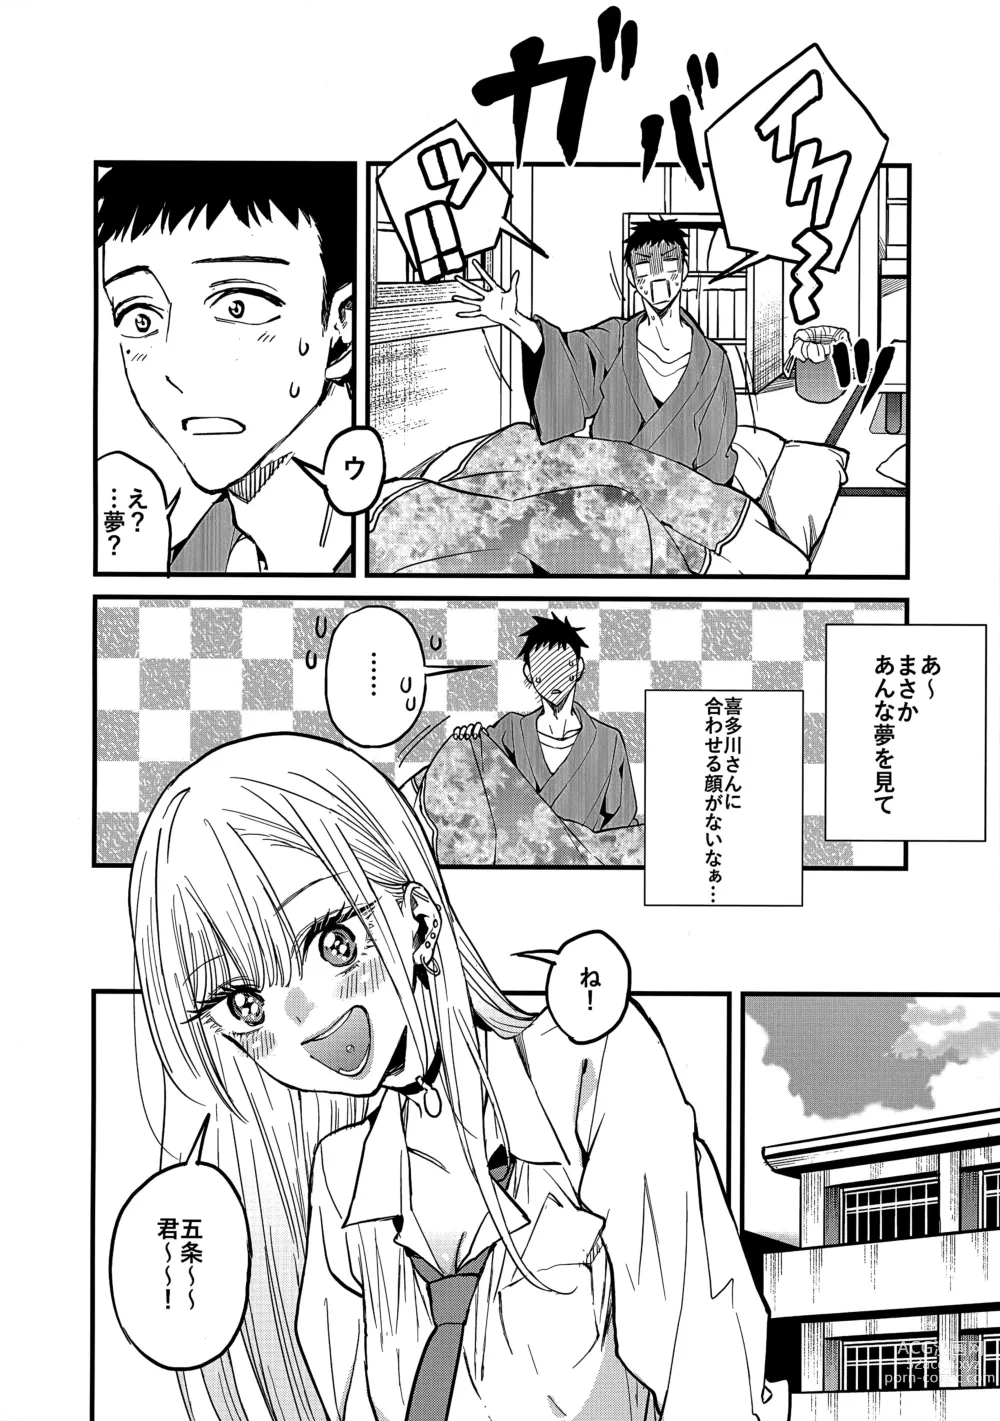 Page 5 of doujinshi Koi